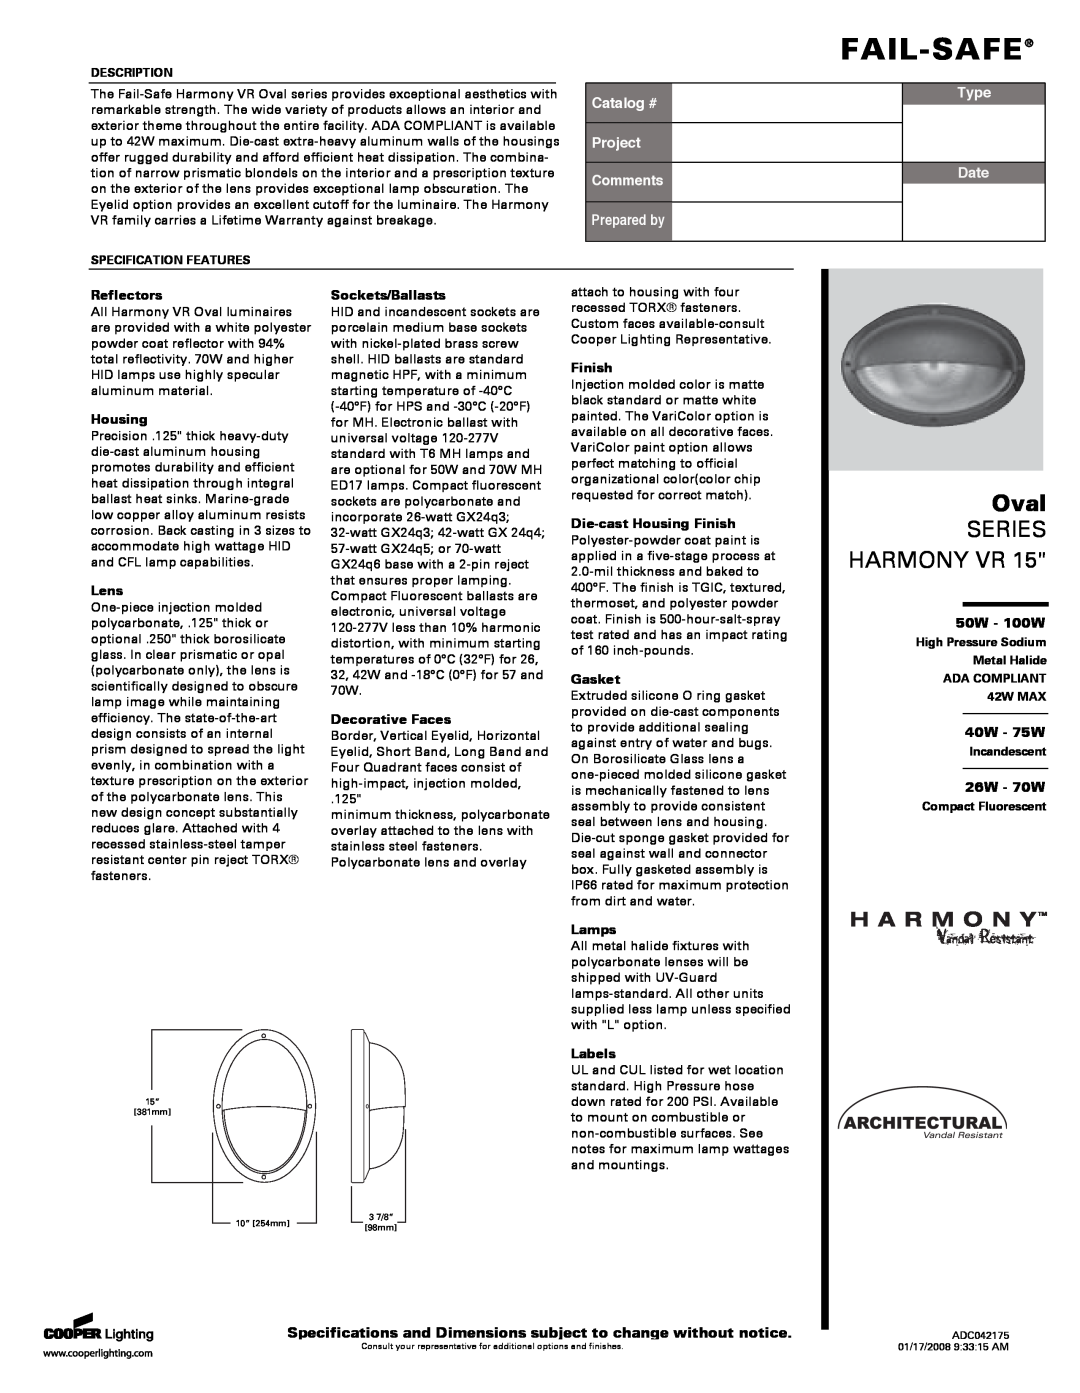 Cooper Lighting Oval Series specifications 50W - 100W, 40W - 75W, 26W - 70W, Fail-Safe, Series Harmony Vr, Catalog #, Type 